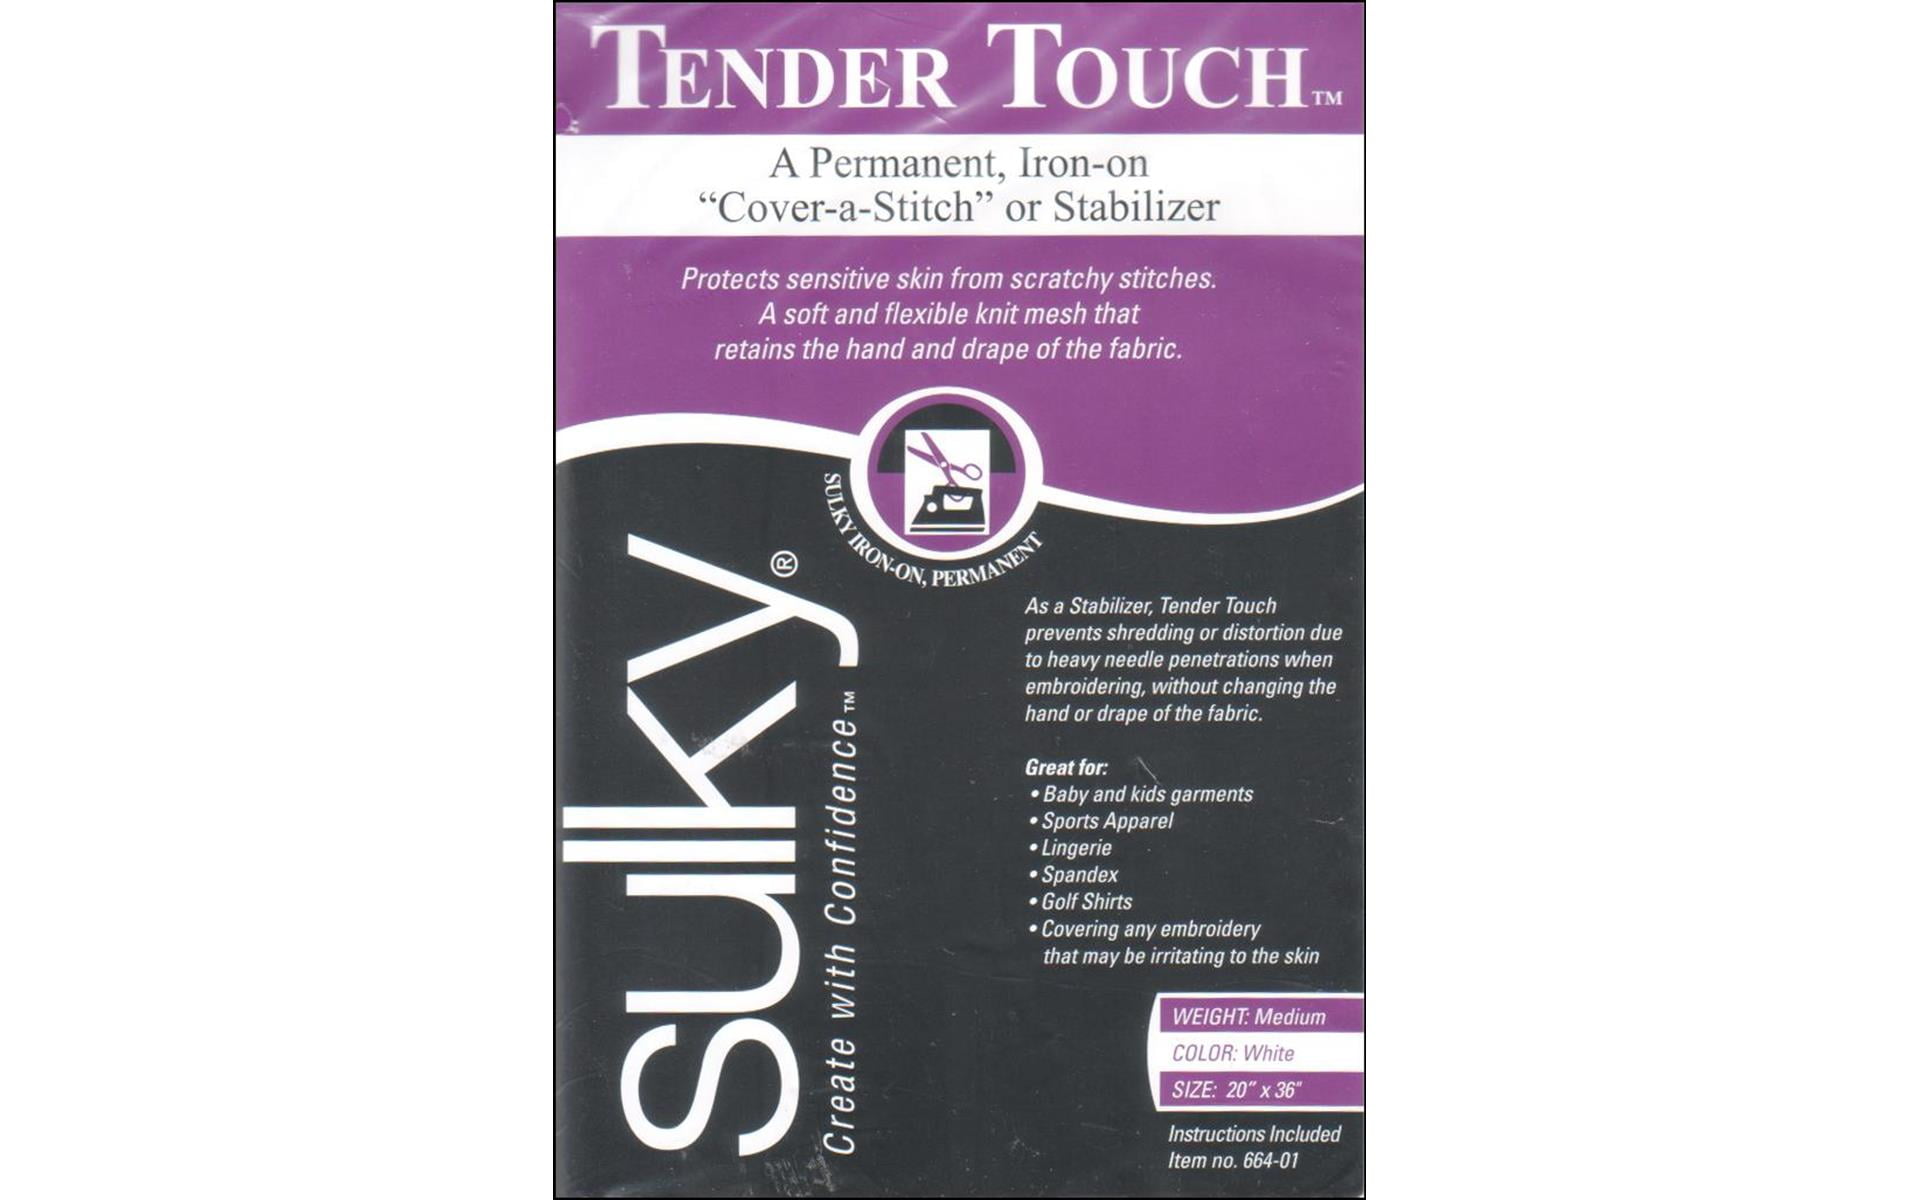 Sulky Fabri-Solvy Soluble Stabilizer-20X36